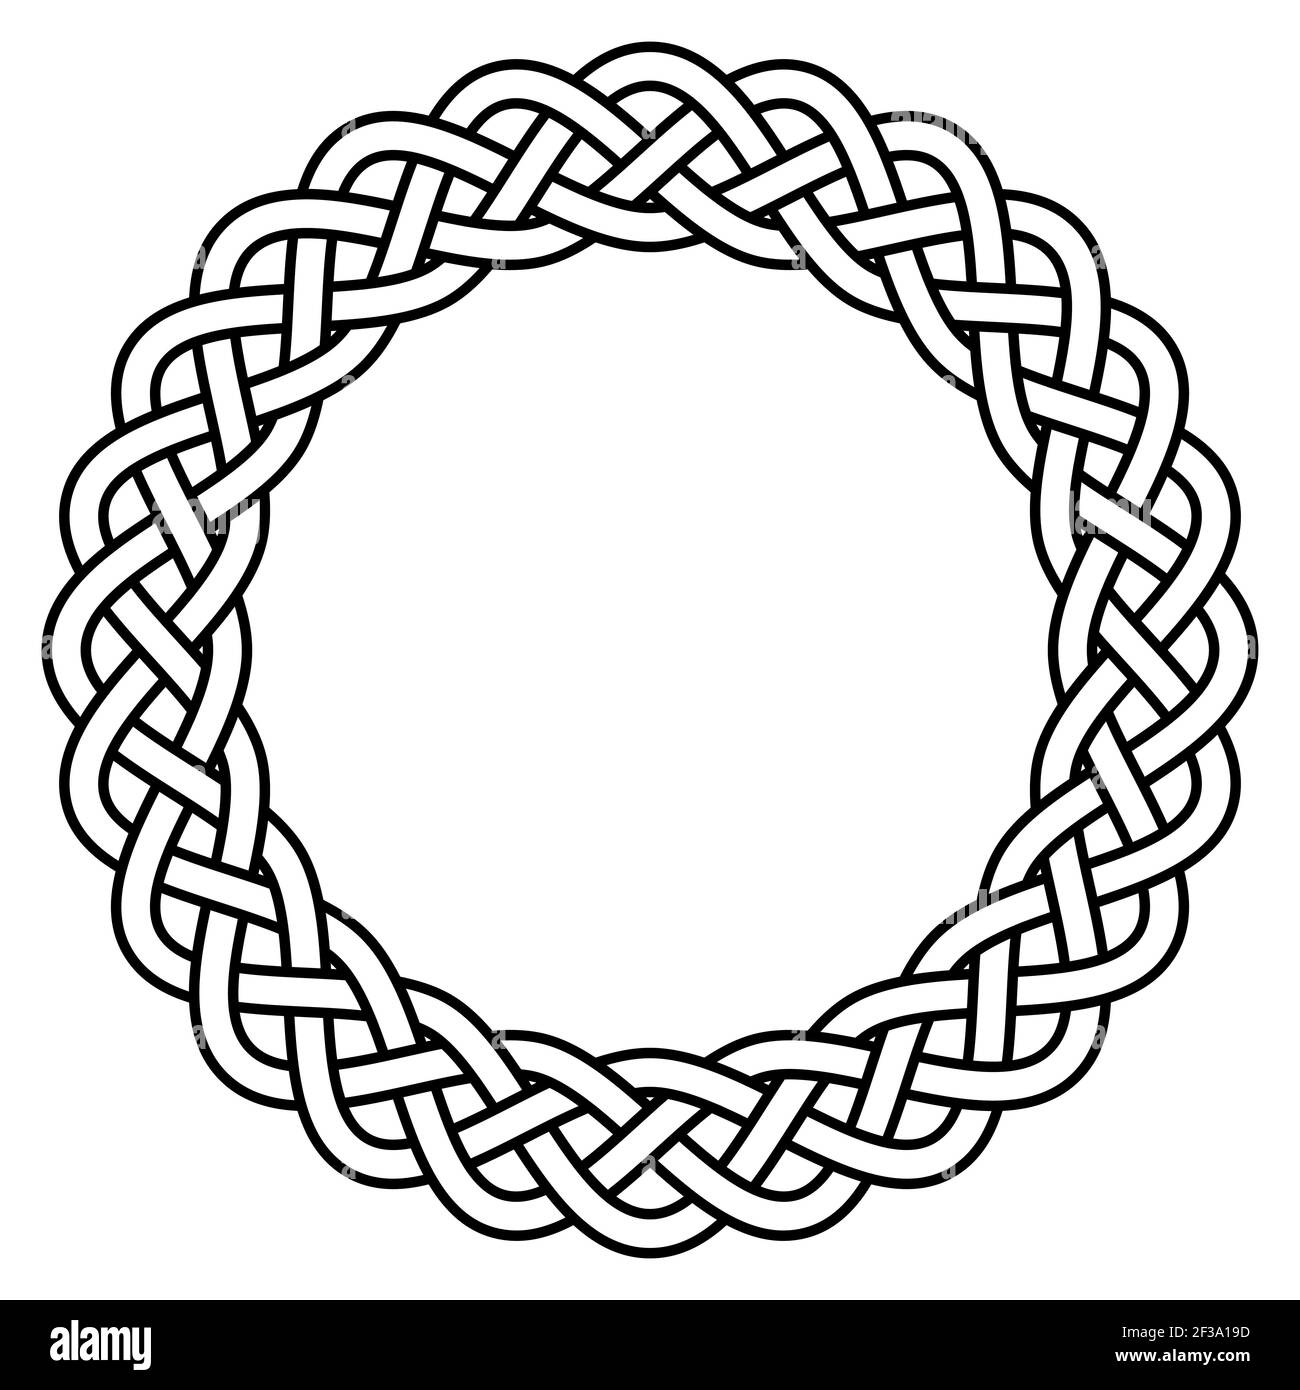 braided knitted guilloche rosette frame vector circular celtic scandinavian knotty pattern Stock Vector